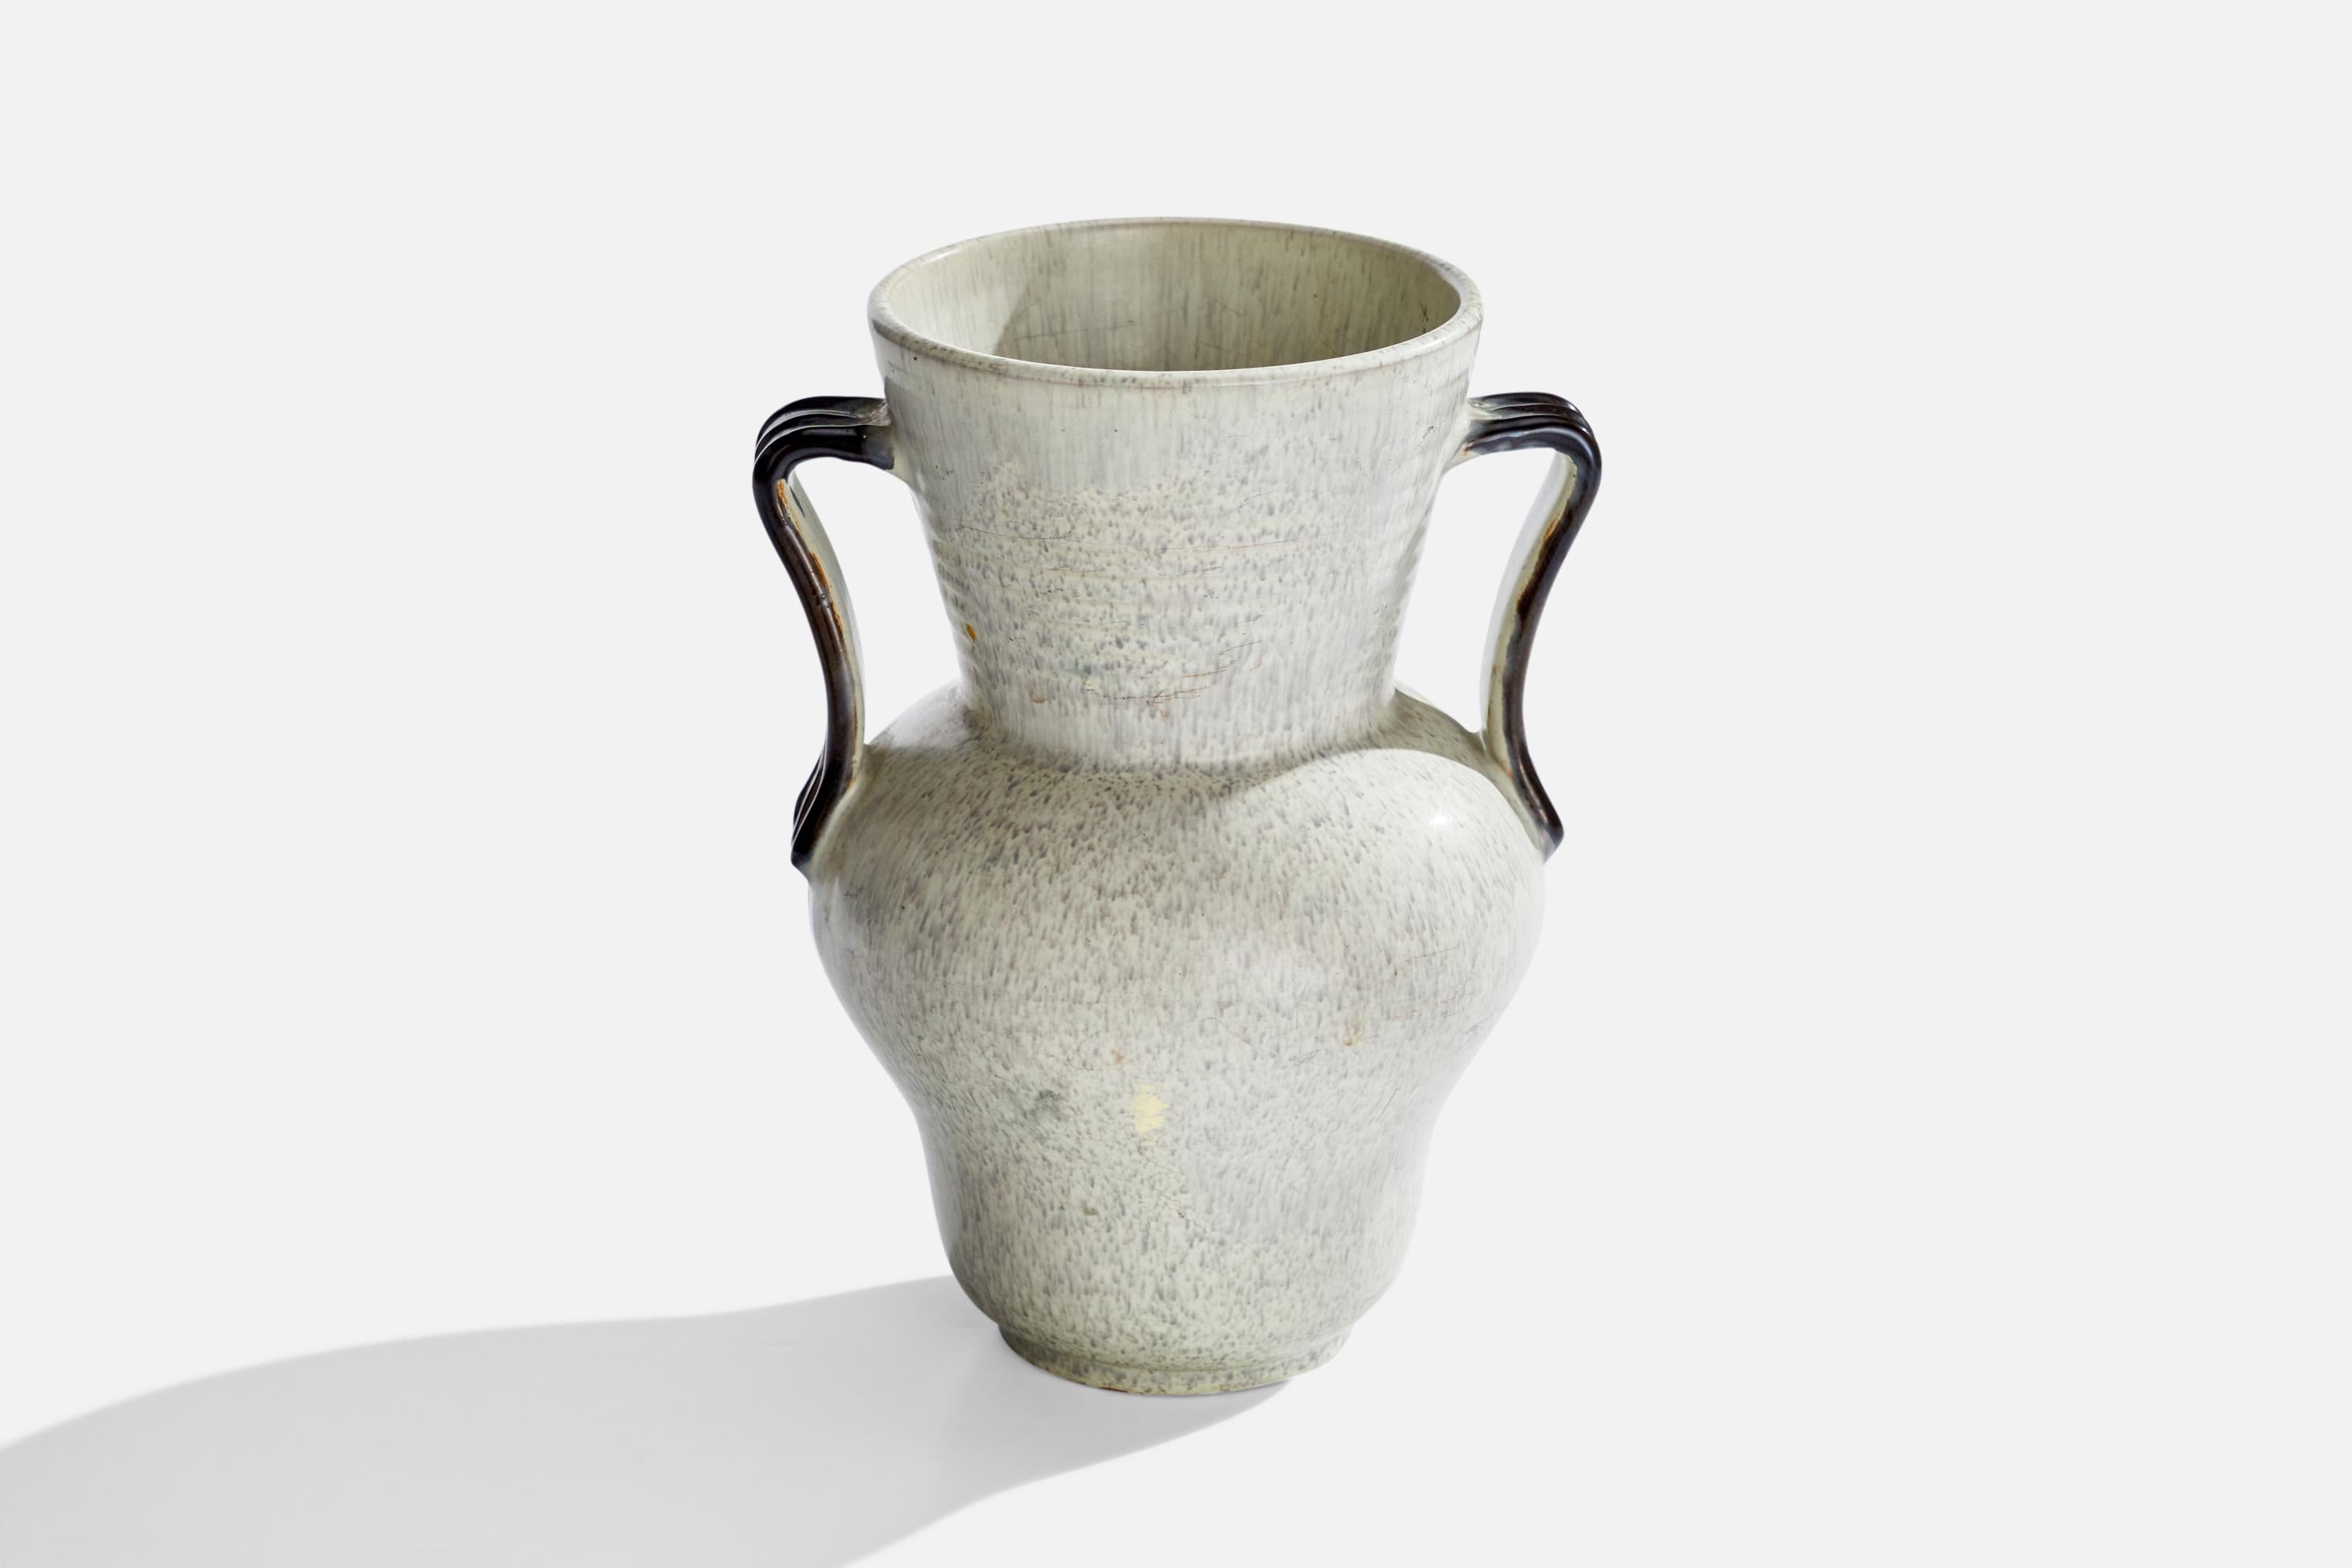 A light grey and black-glazed earthenware vase designed and produced by Upsala Ekeby, Sweden, 1930s.